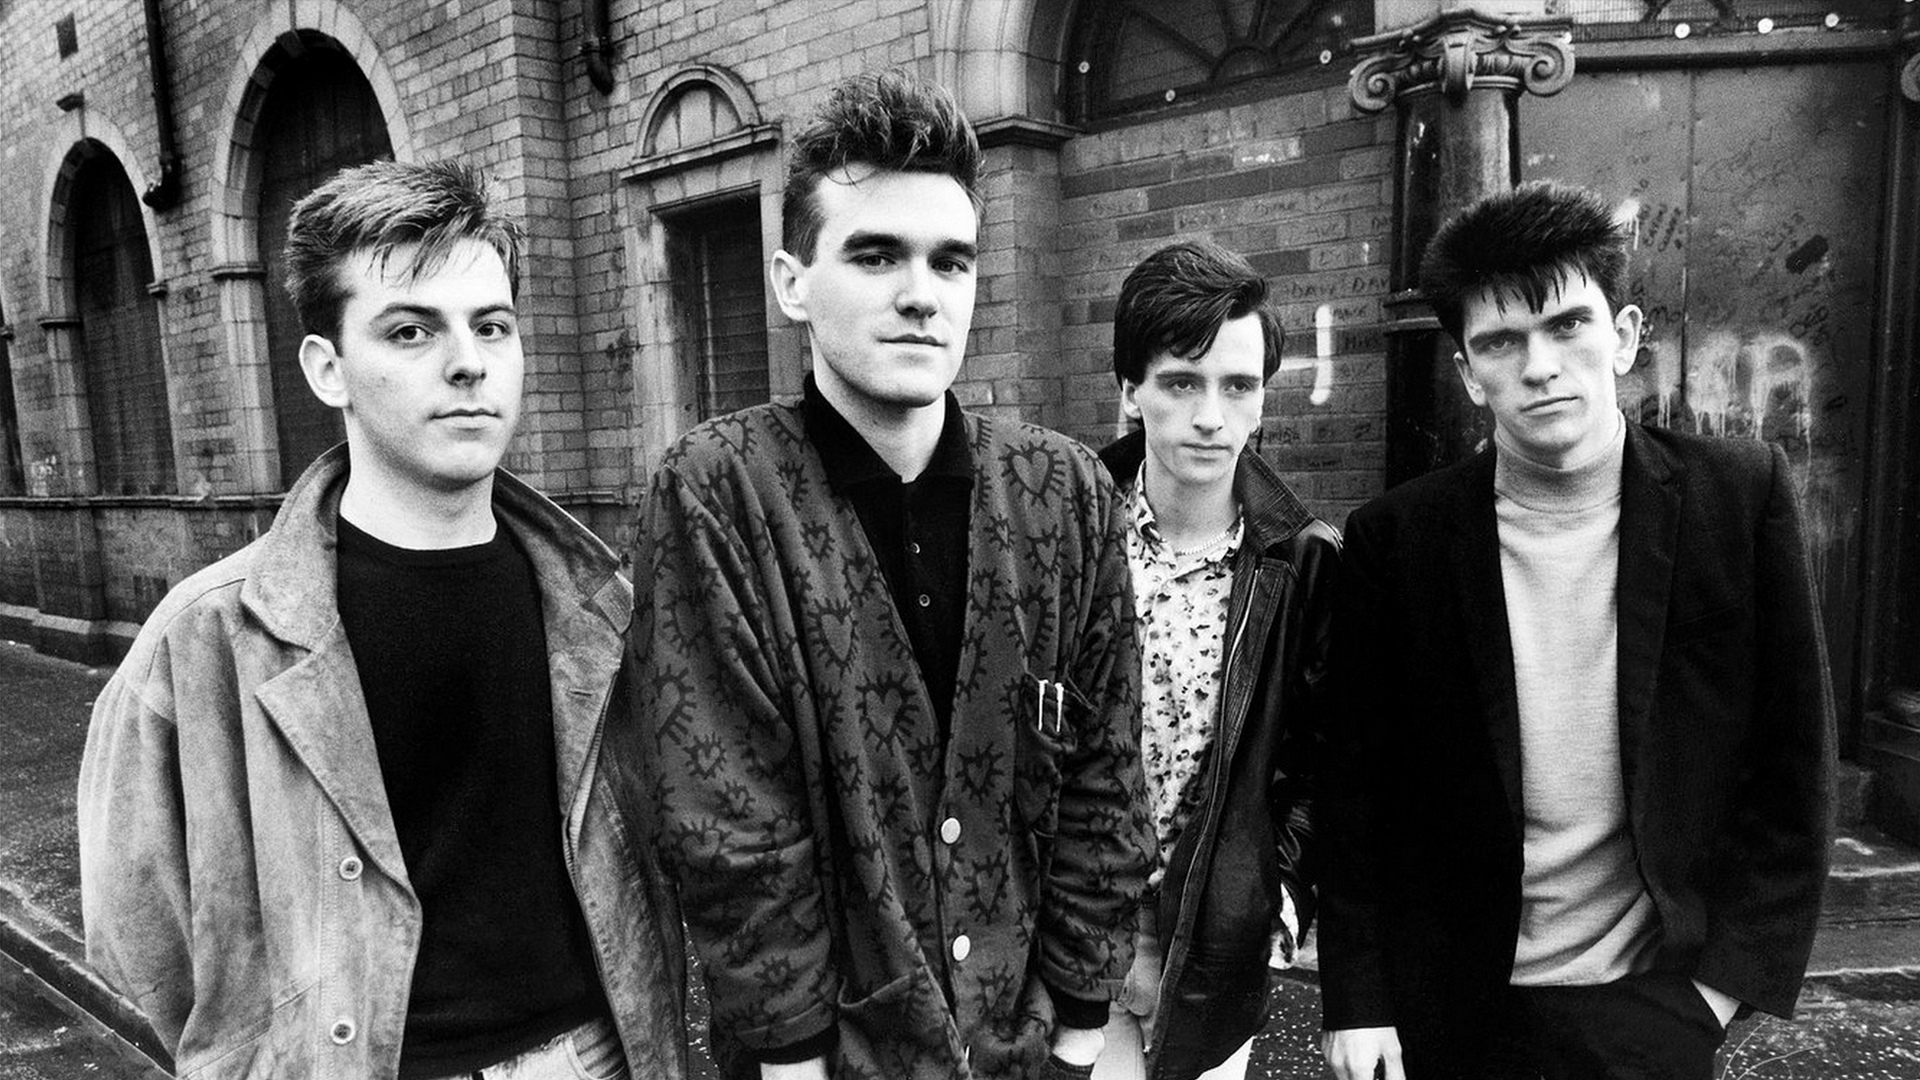 How Soon Is Now? av The Smiths